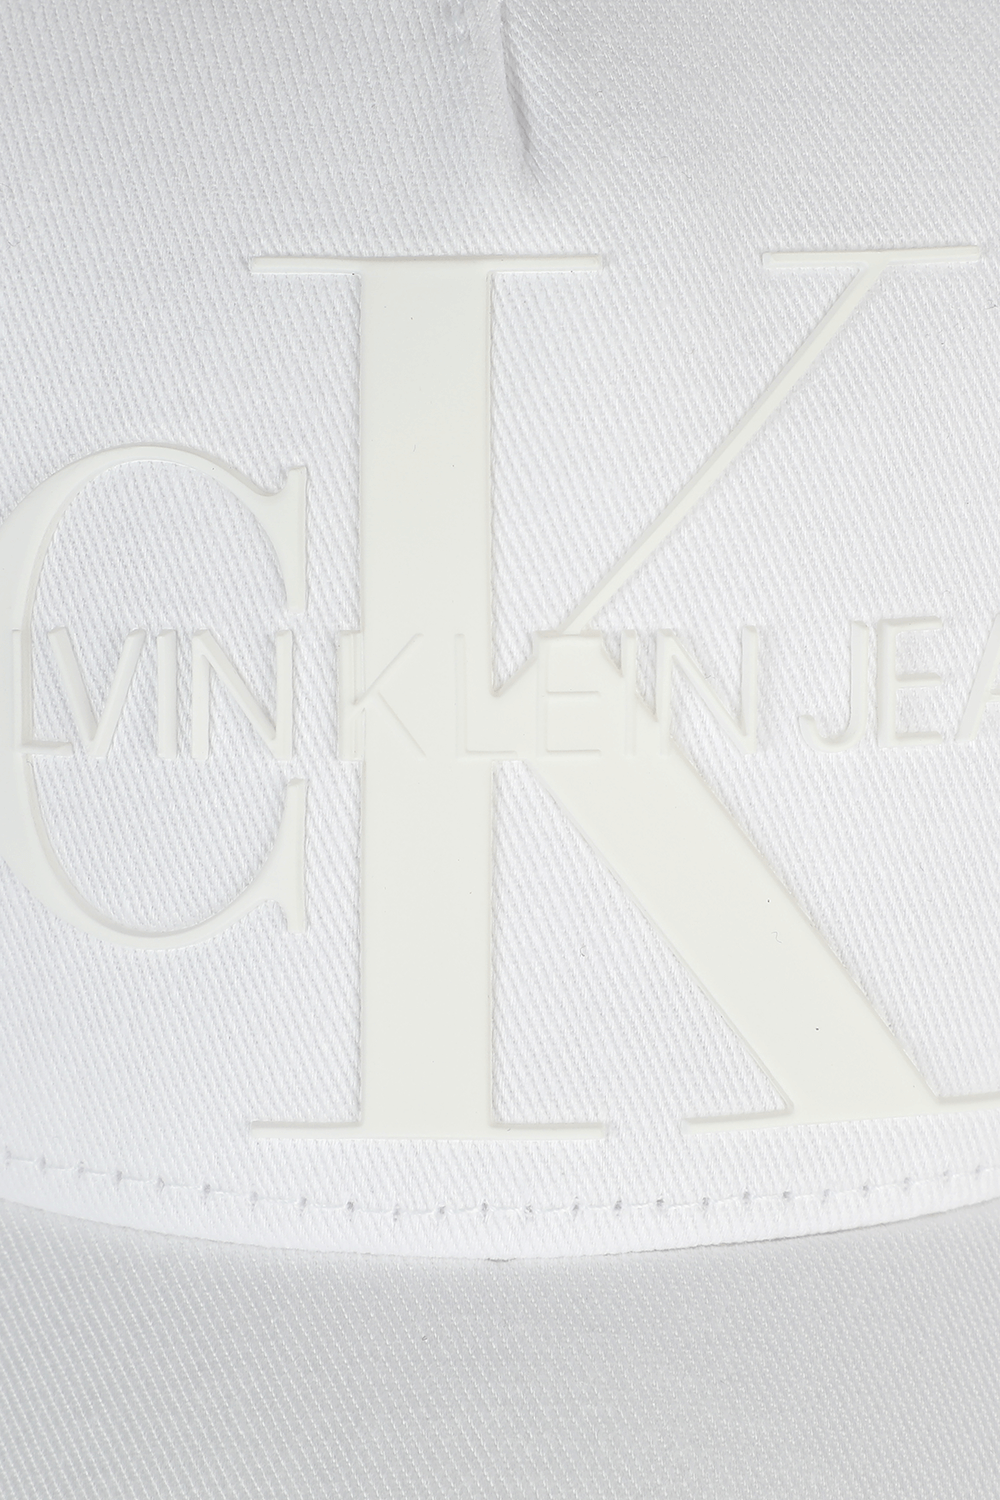 Monogram Cotton Cap In White CALVIN KLEIN